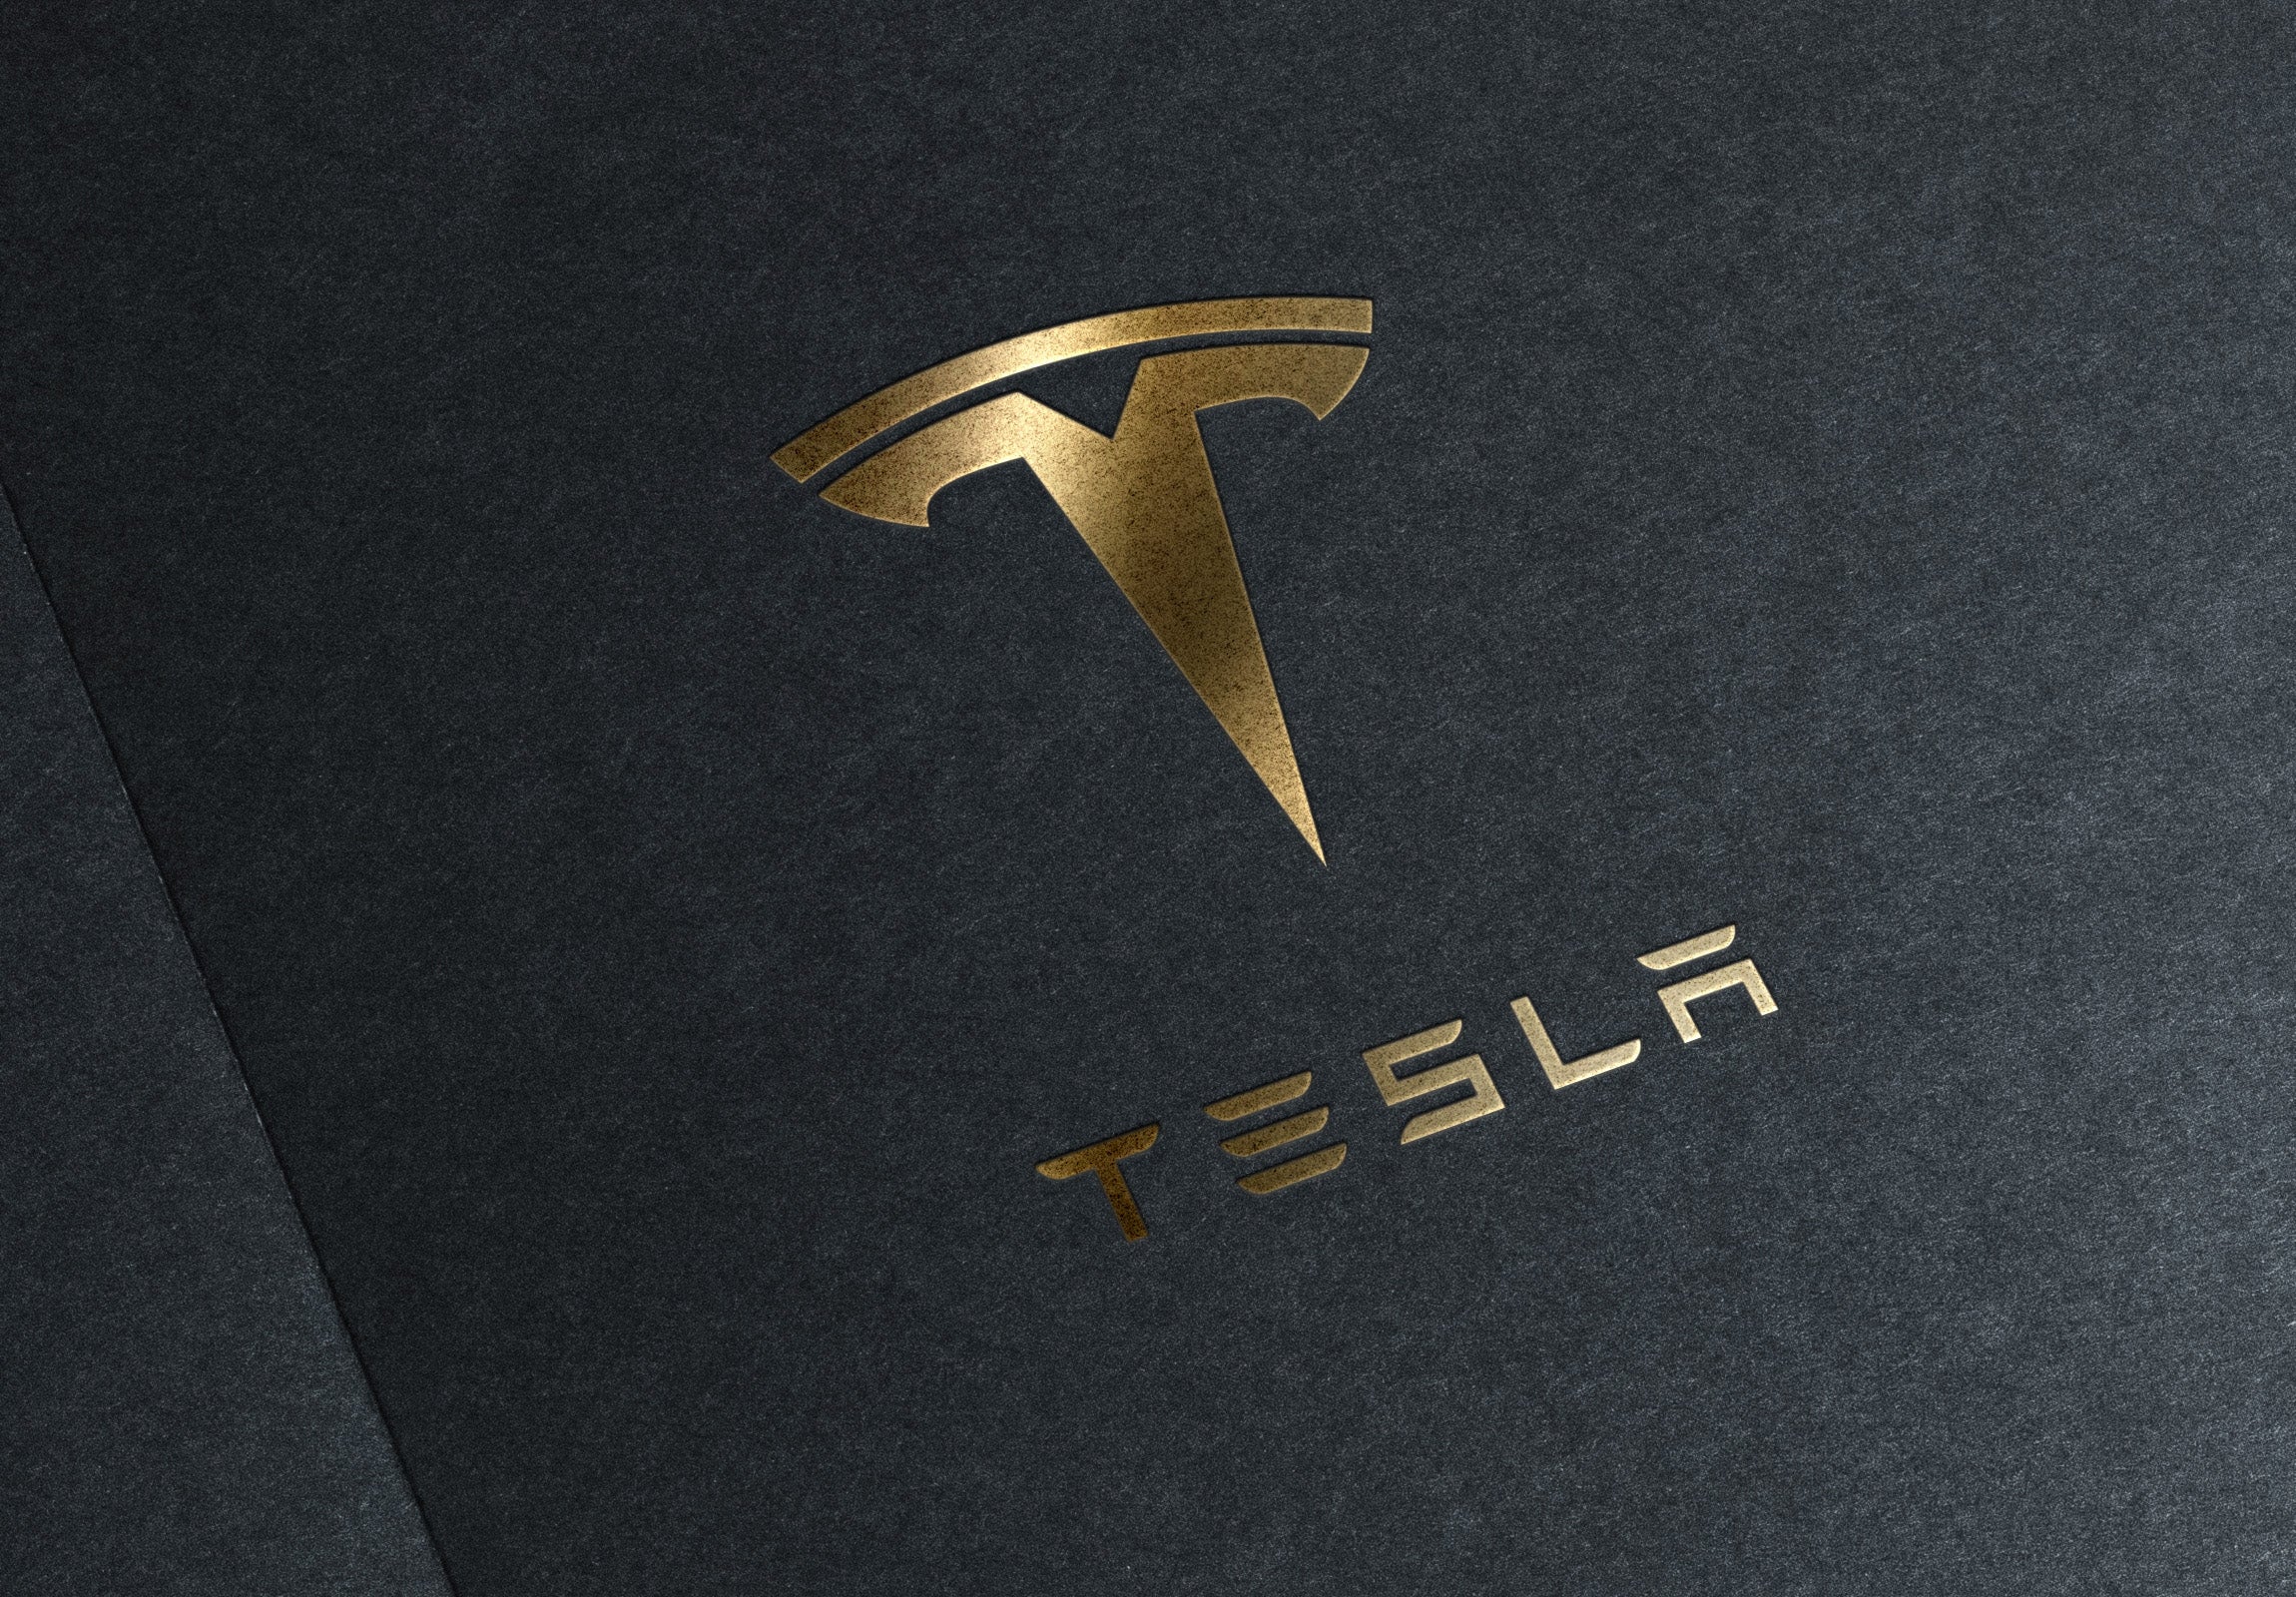 Tesla Long Term Critic Muddy Waters: I'm Not Short The Stock, Thank God